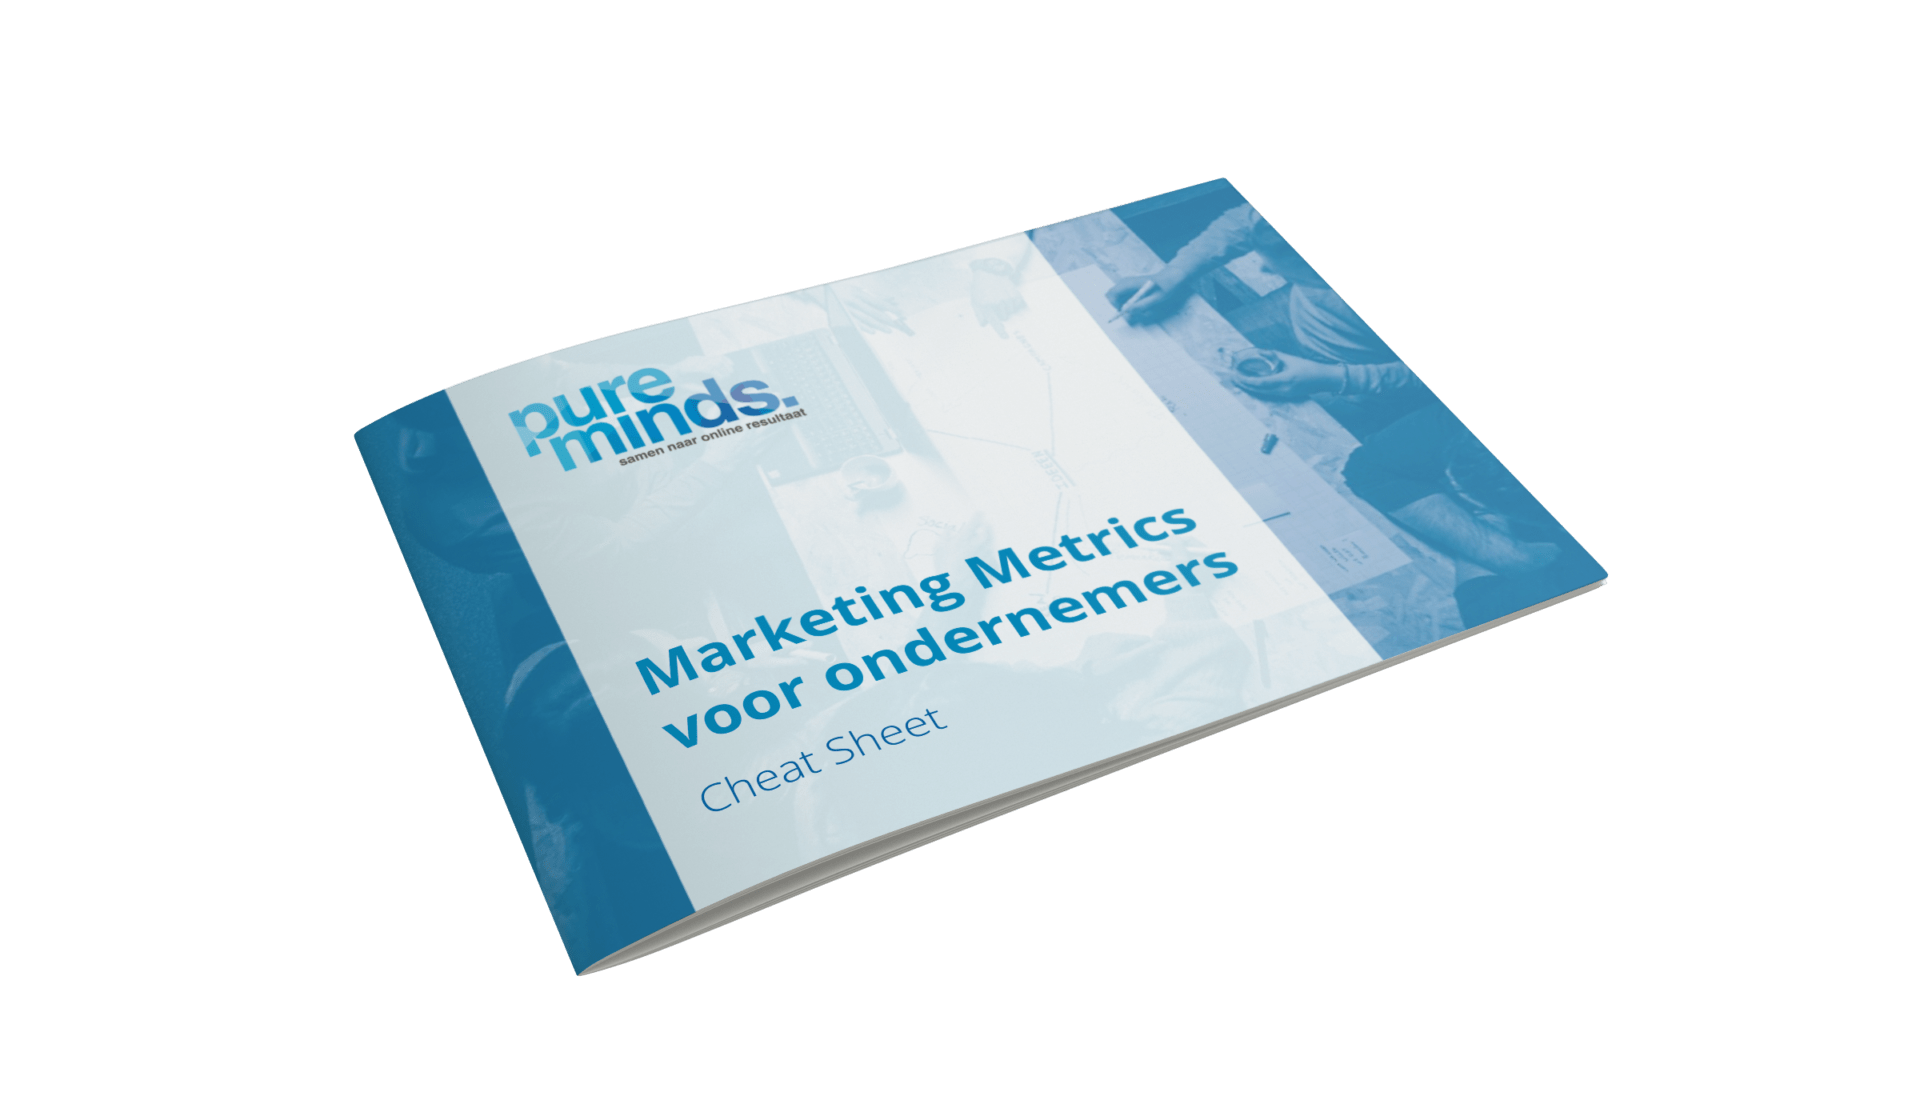 Marketing Metrics voor ondernemers cheat sheet